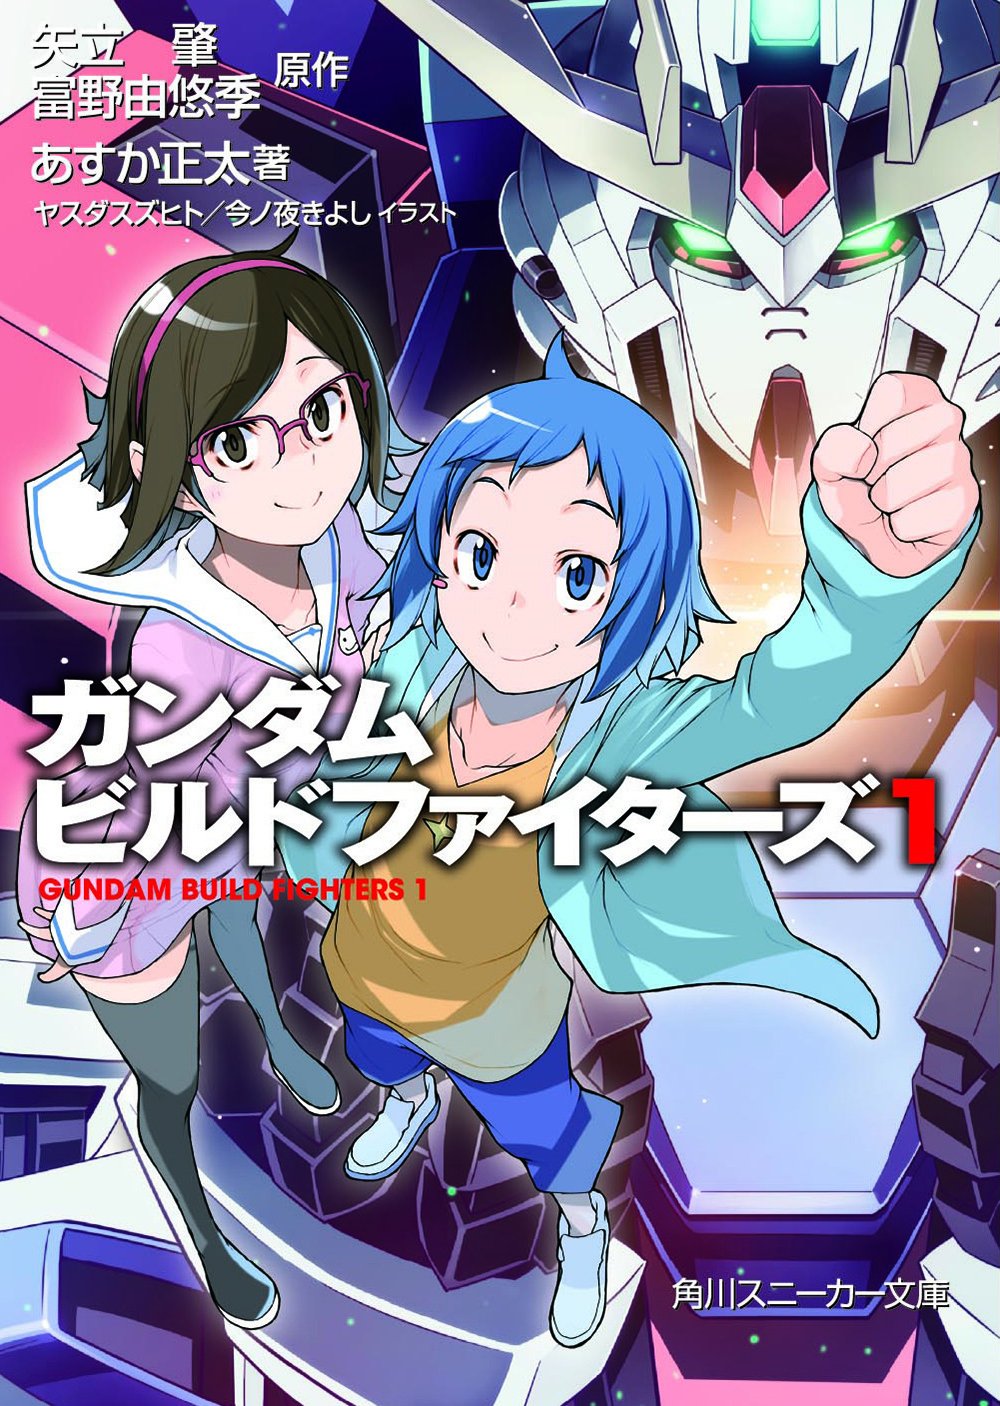 Gundam Build Fighters | The Gundam Wiki | Fandom